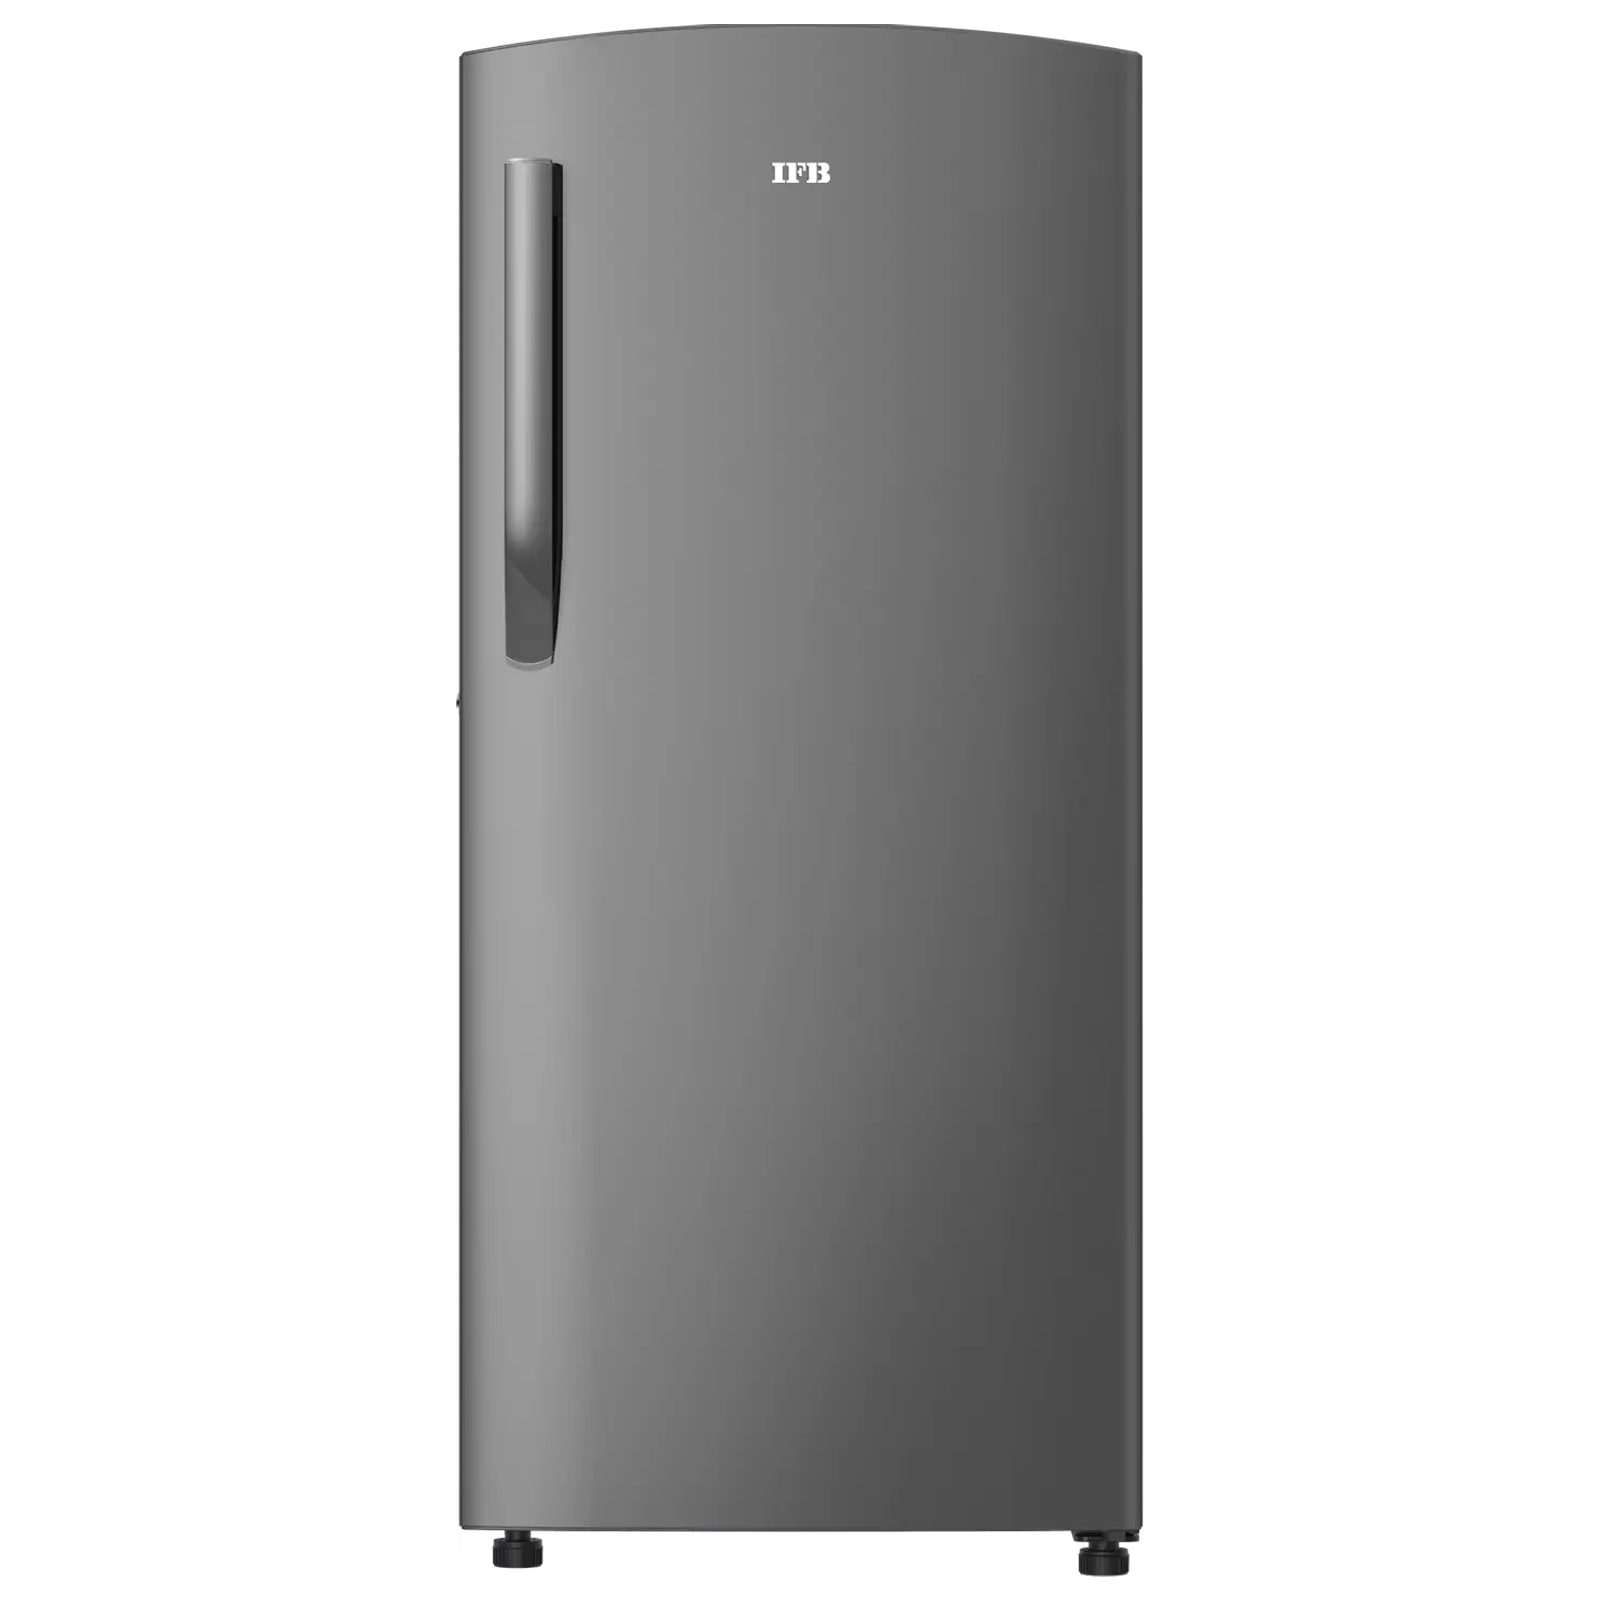 IFB Metal Cool 193 Litres 3 Star Direct Cool Single Door Refrigerator with Antibacterial Gasket (IFBDC2133FAS, Grey Steel)